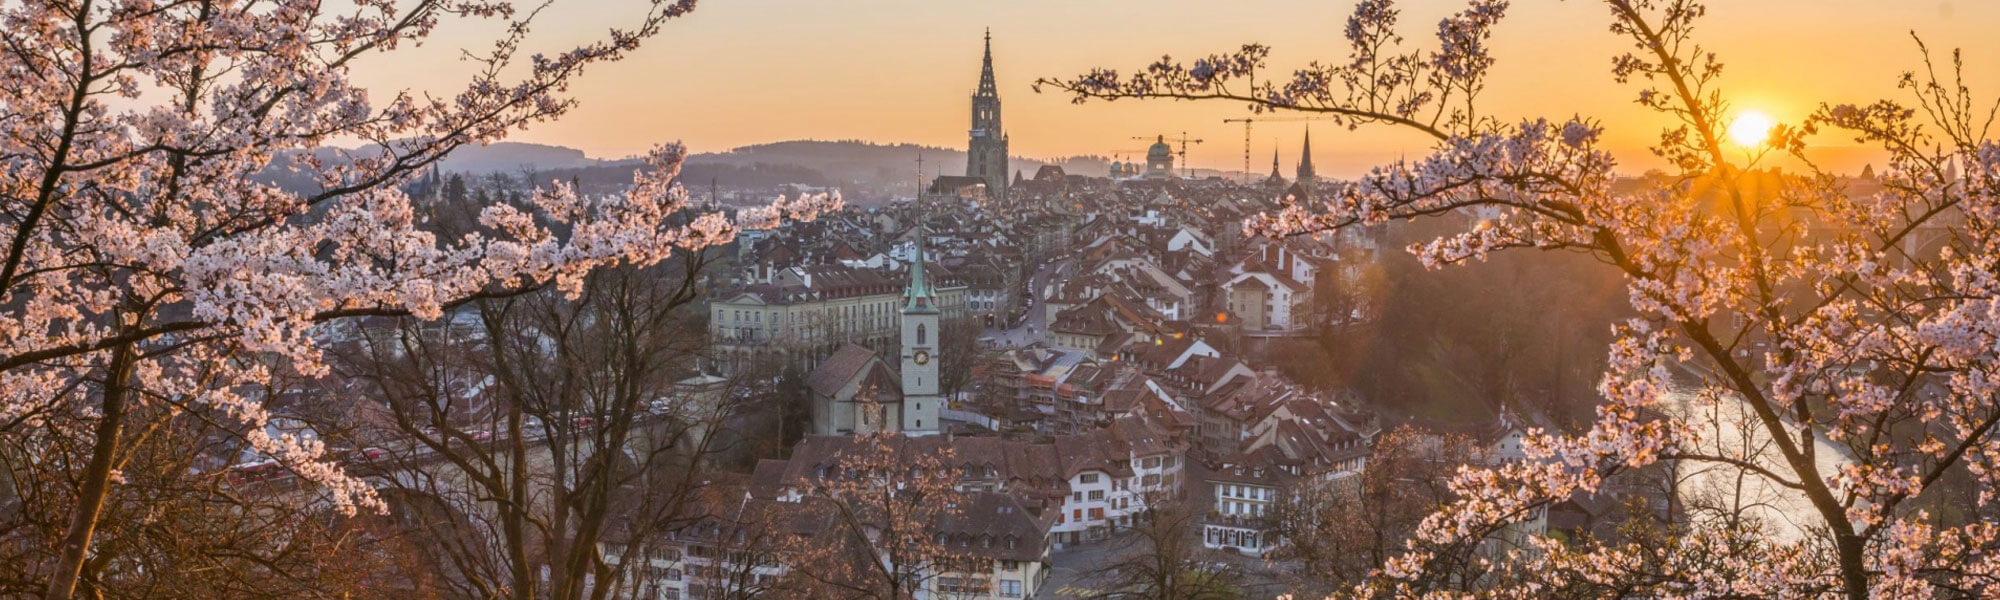 Canton of Bern